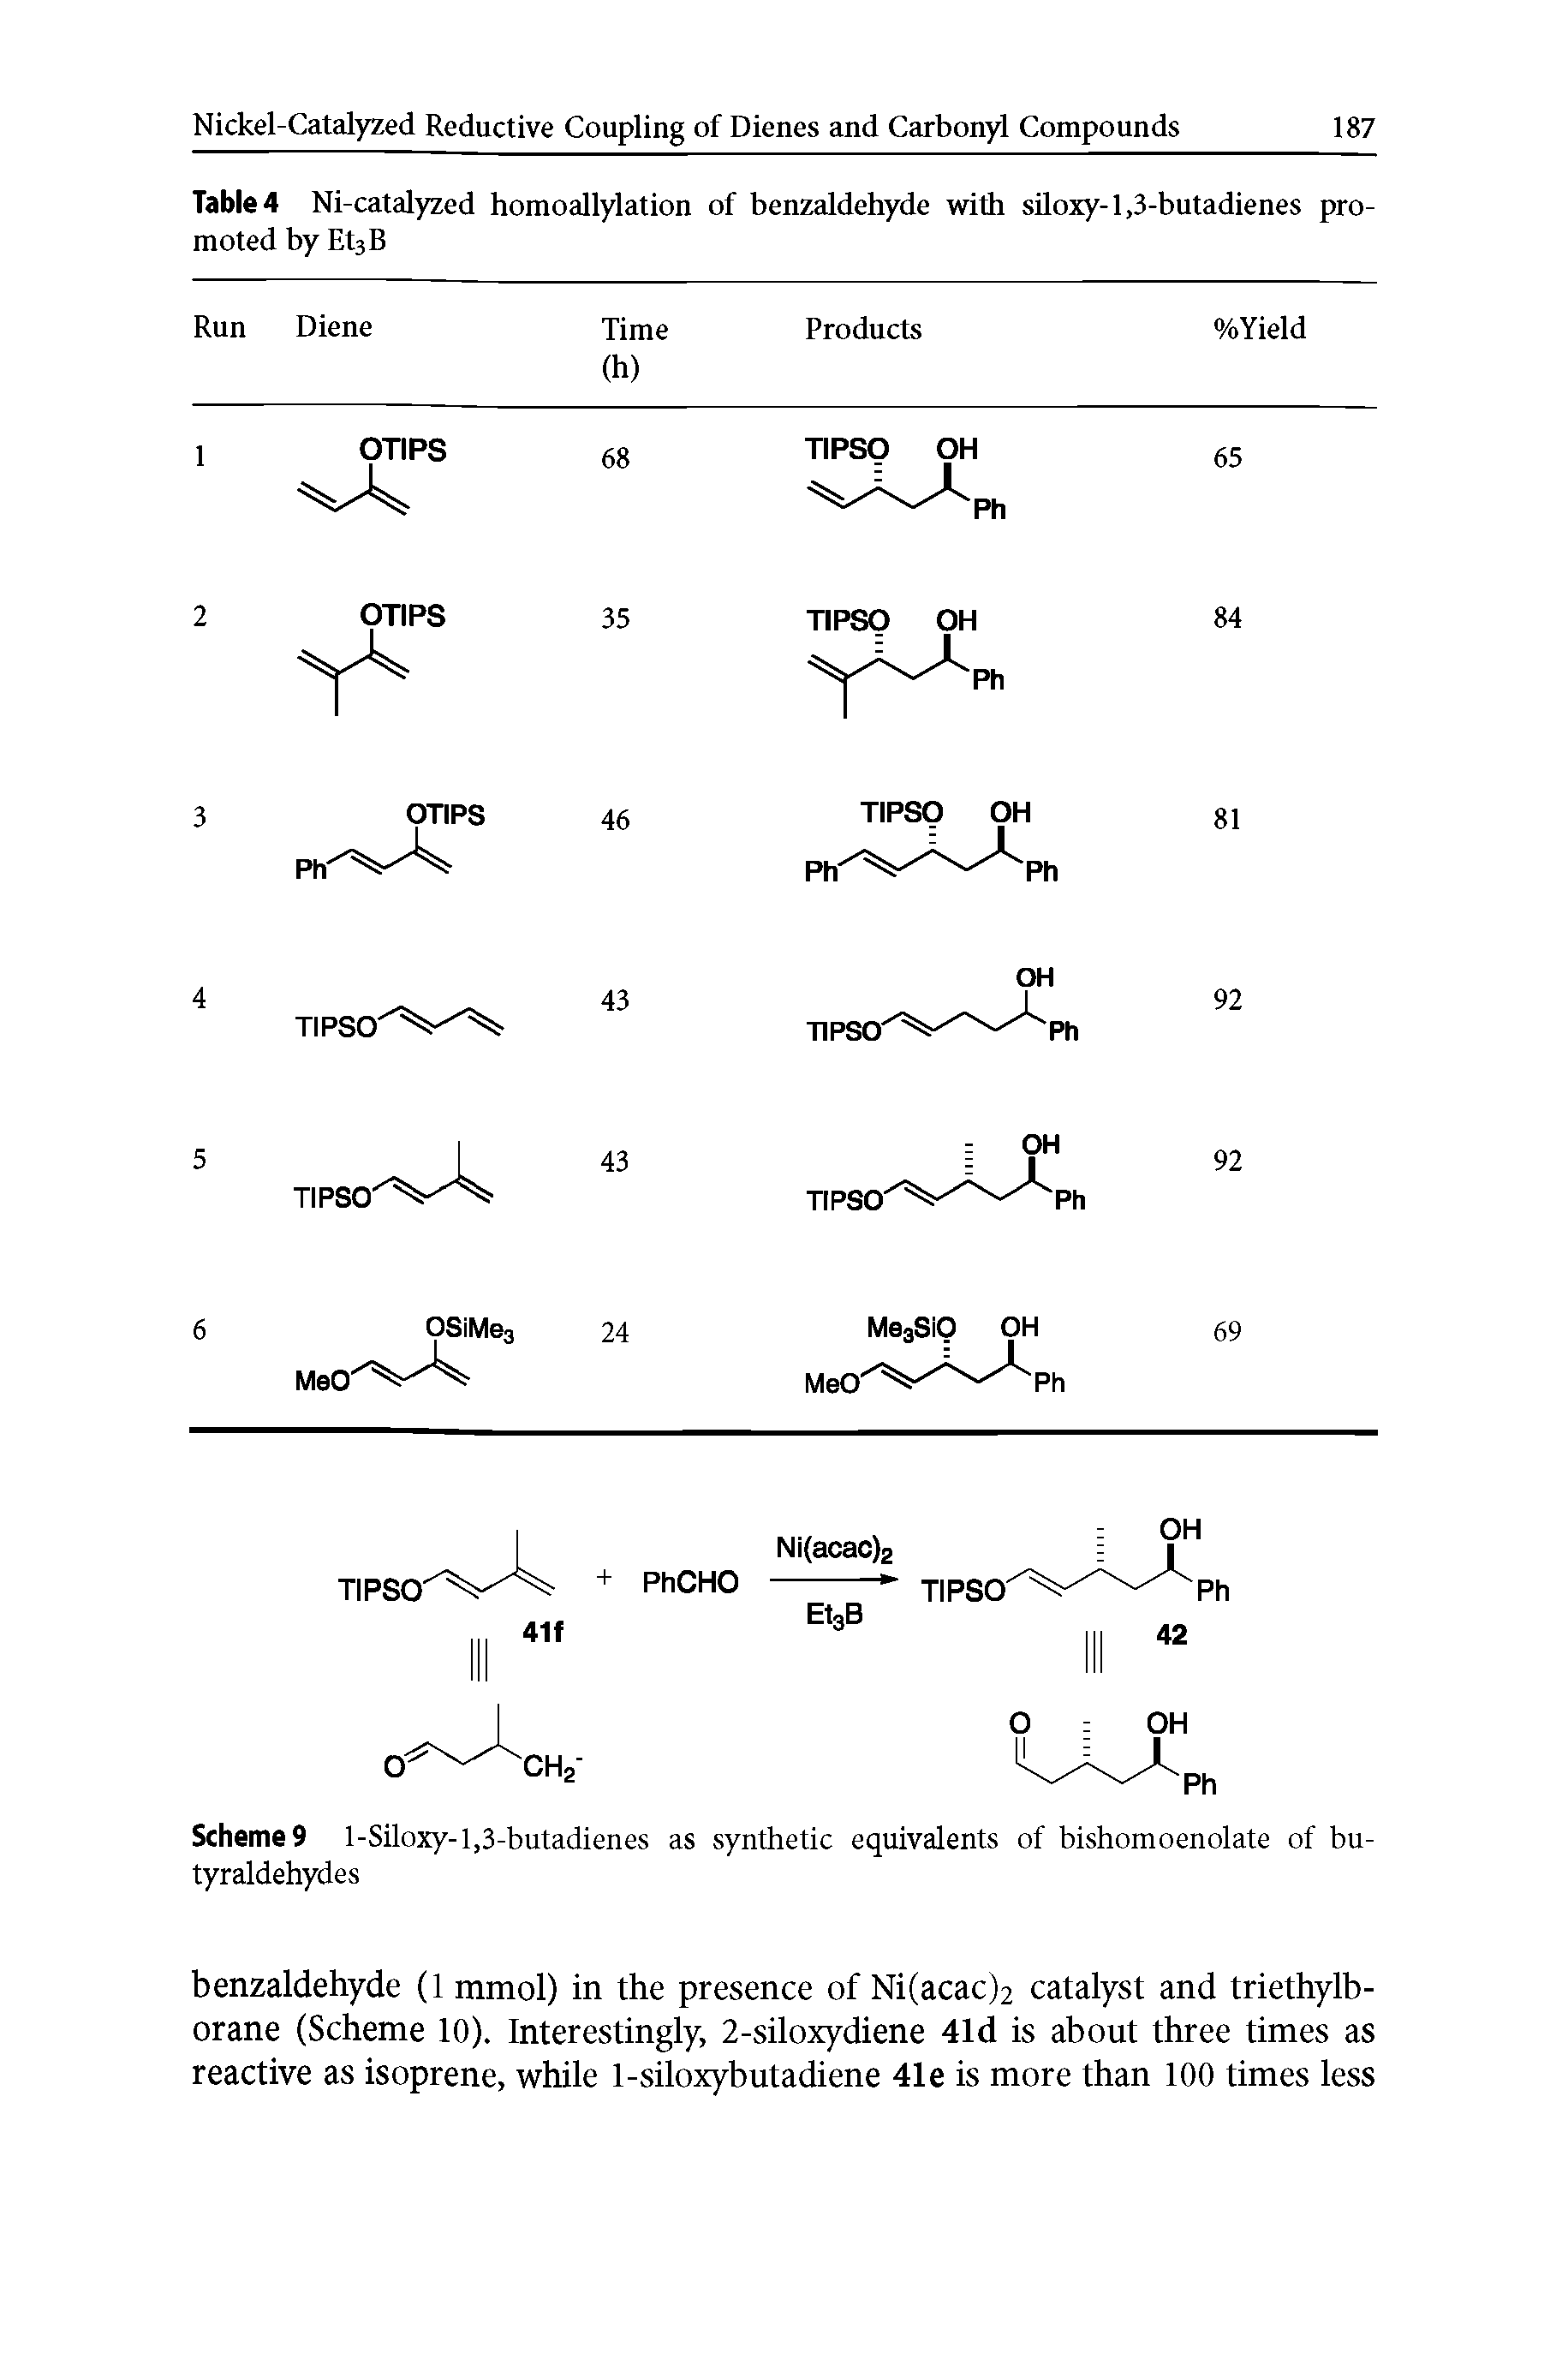 Scheme 9 1-Siloxy- 1,3-butadienes as synthetic equivalents of bishomoenolate of bu-tyraldehydes...